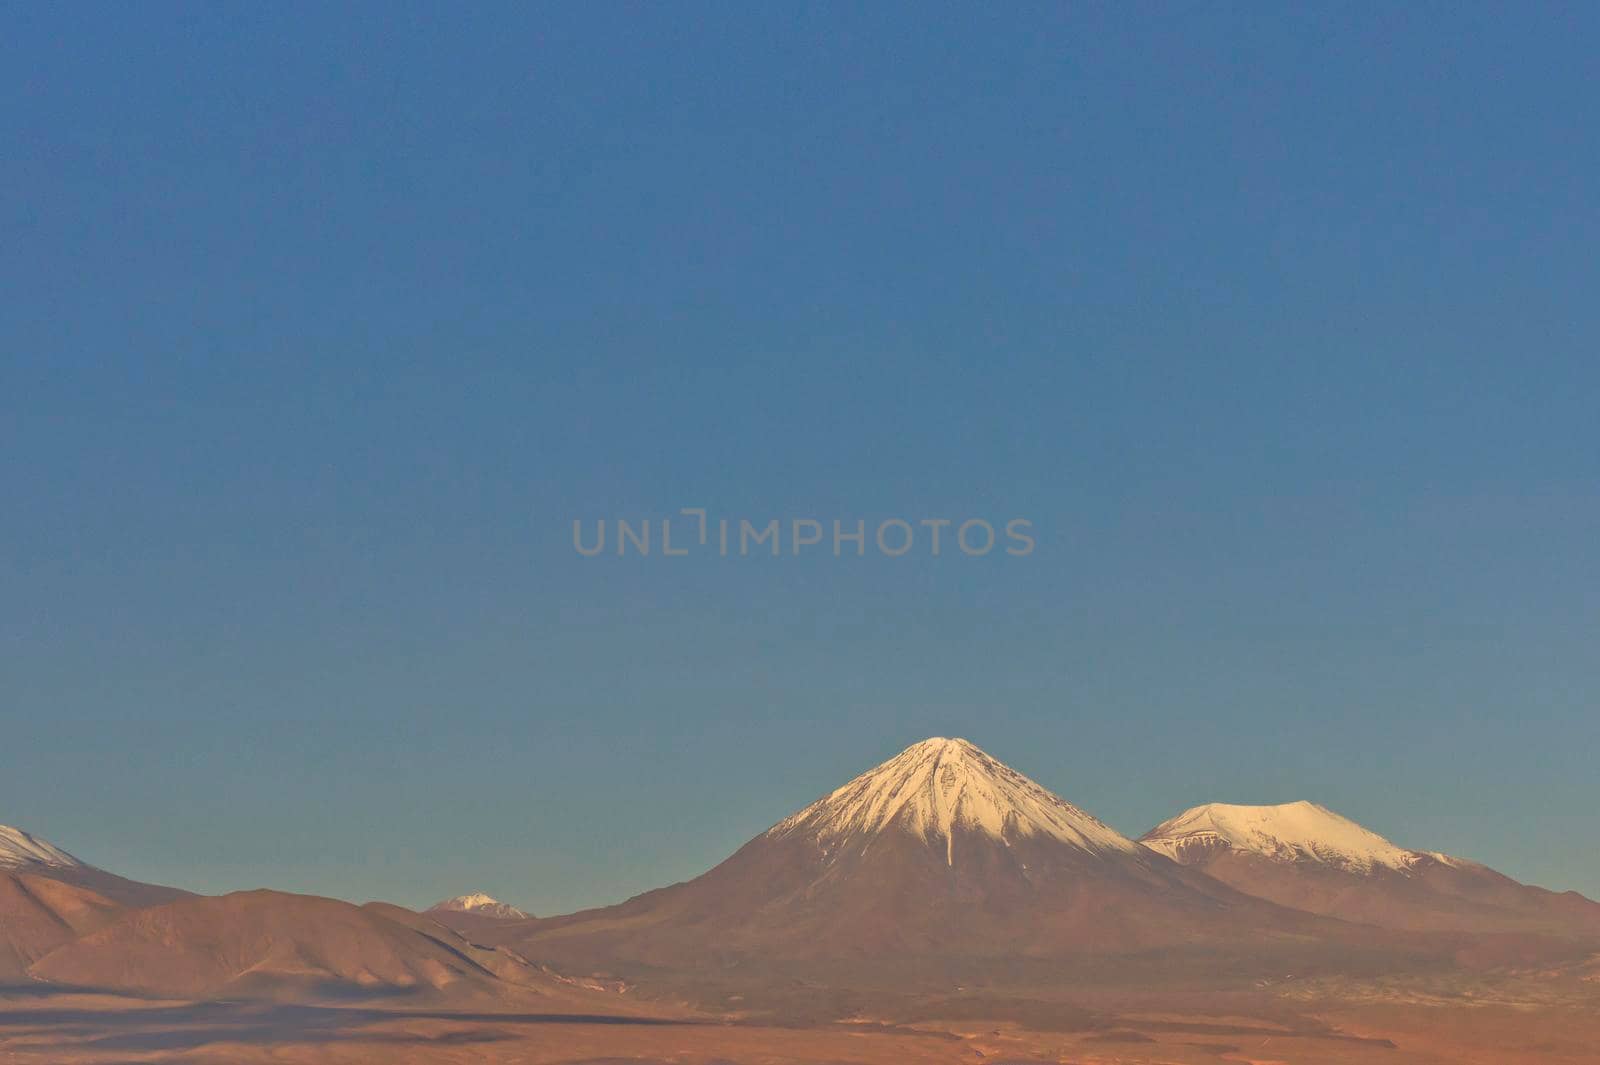 Atacama Desert, Natural landscape with Licancabur Volcano, Chile, South America by giannakisphoto